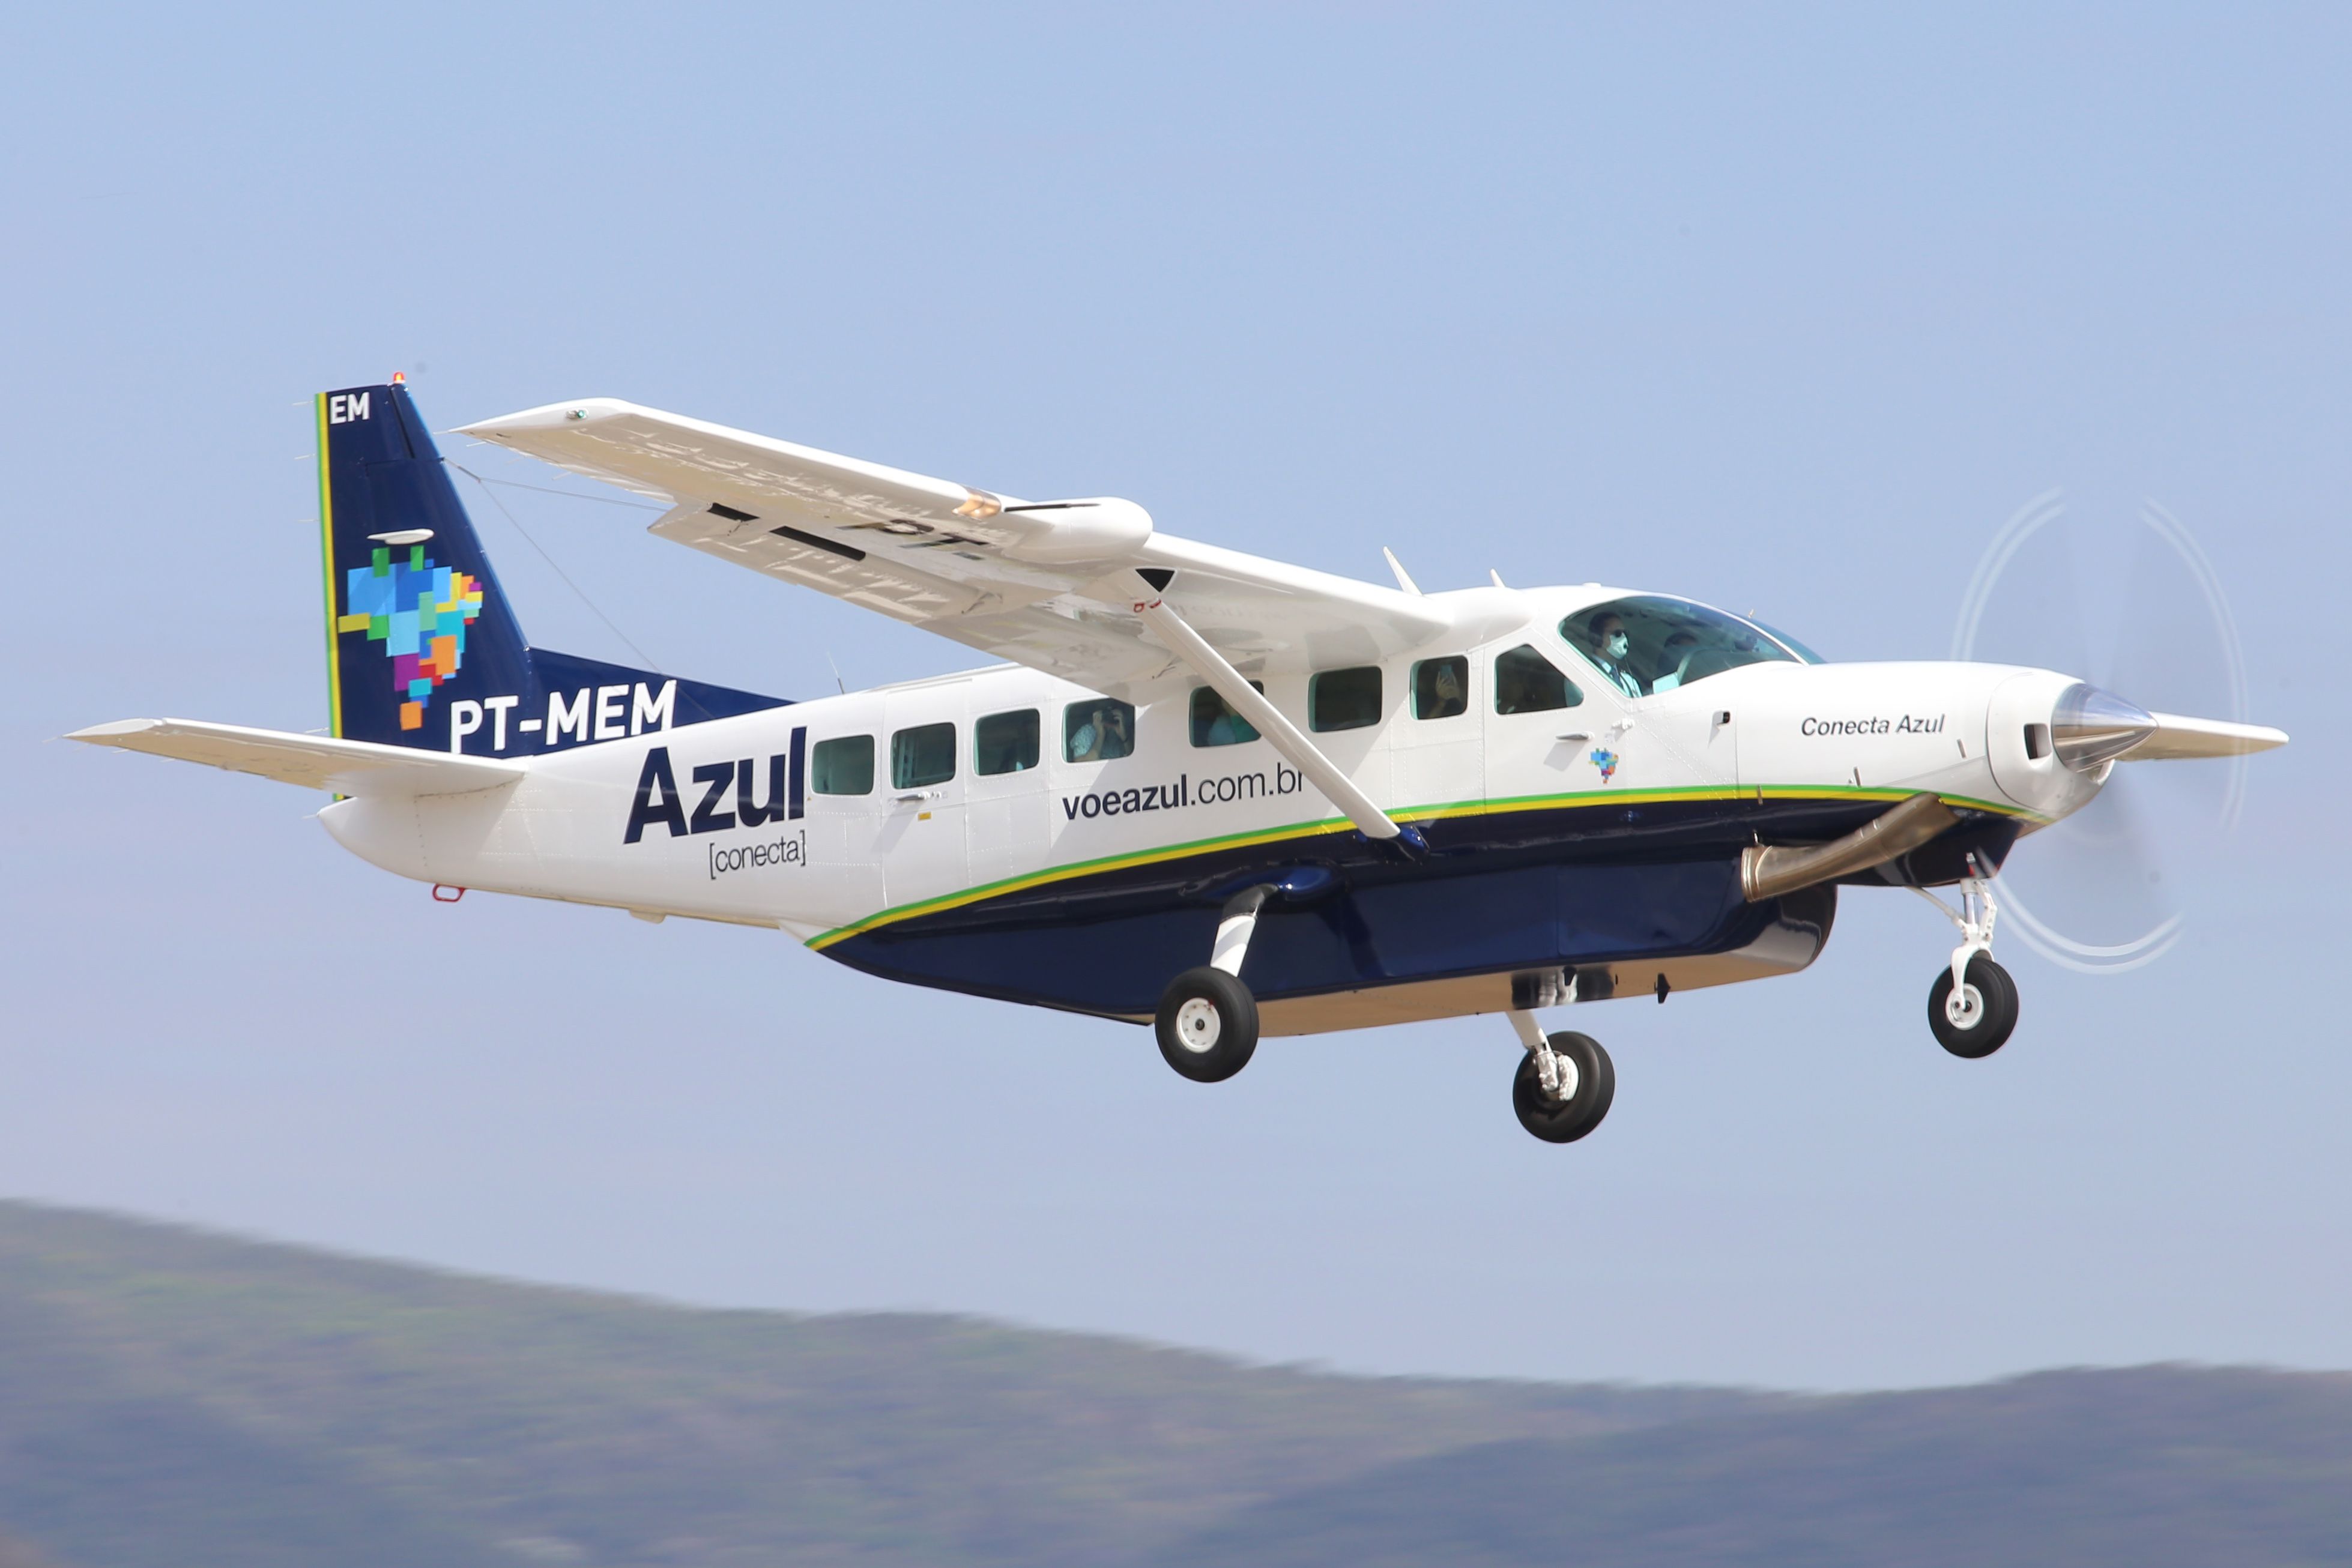 An Azul Connecta Cessna Caravan aircraft